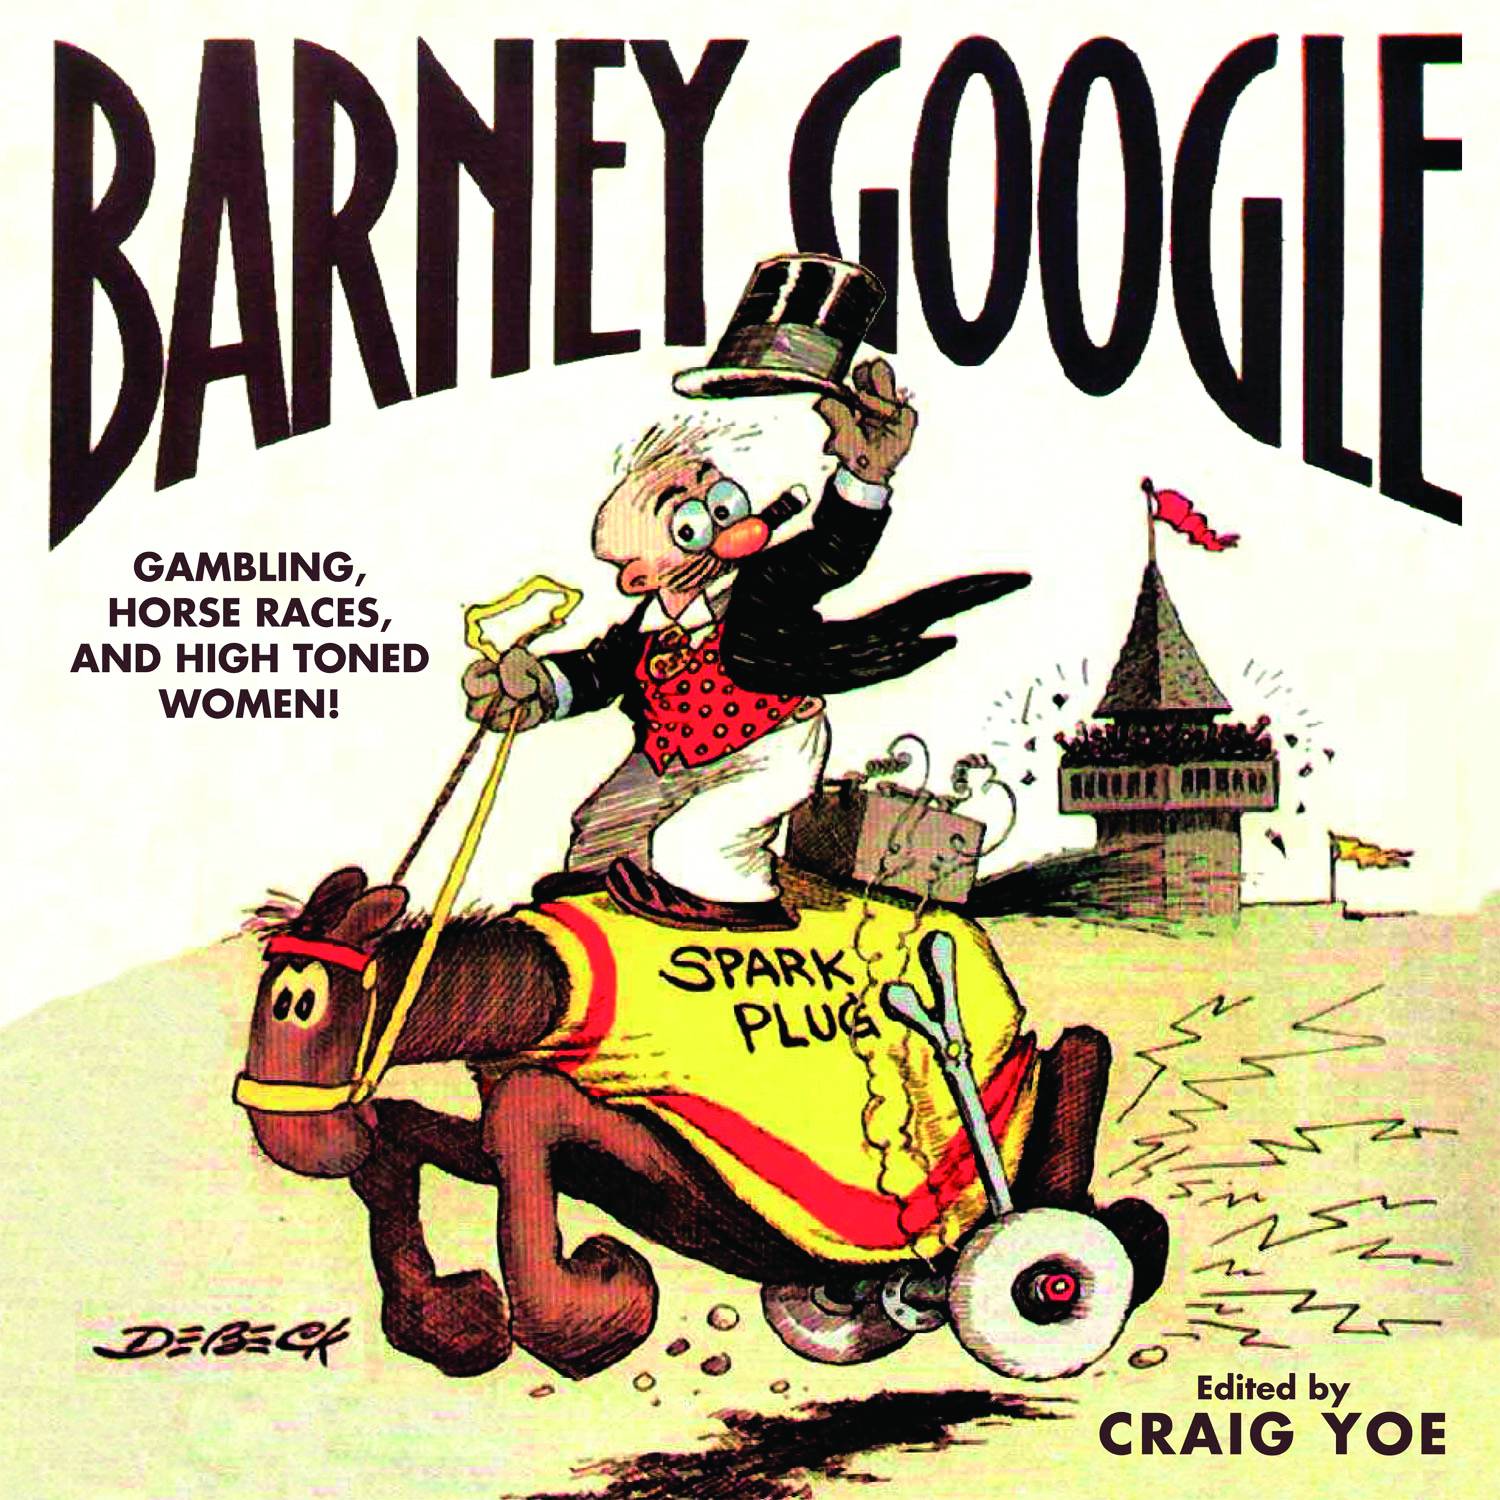 Barney Google